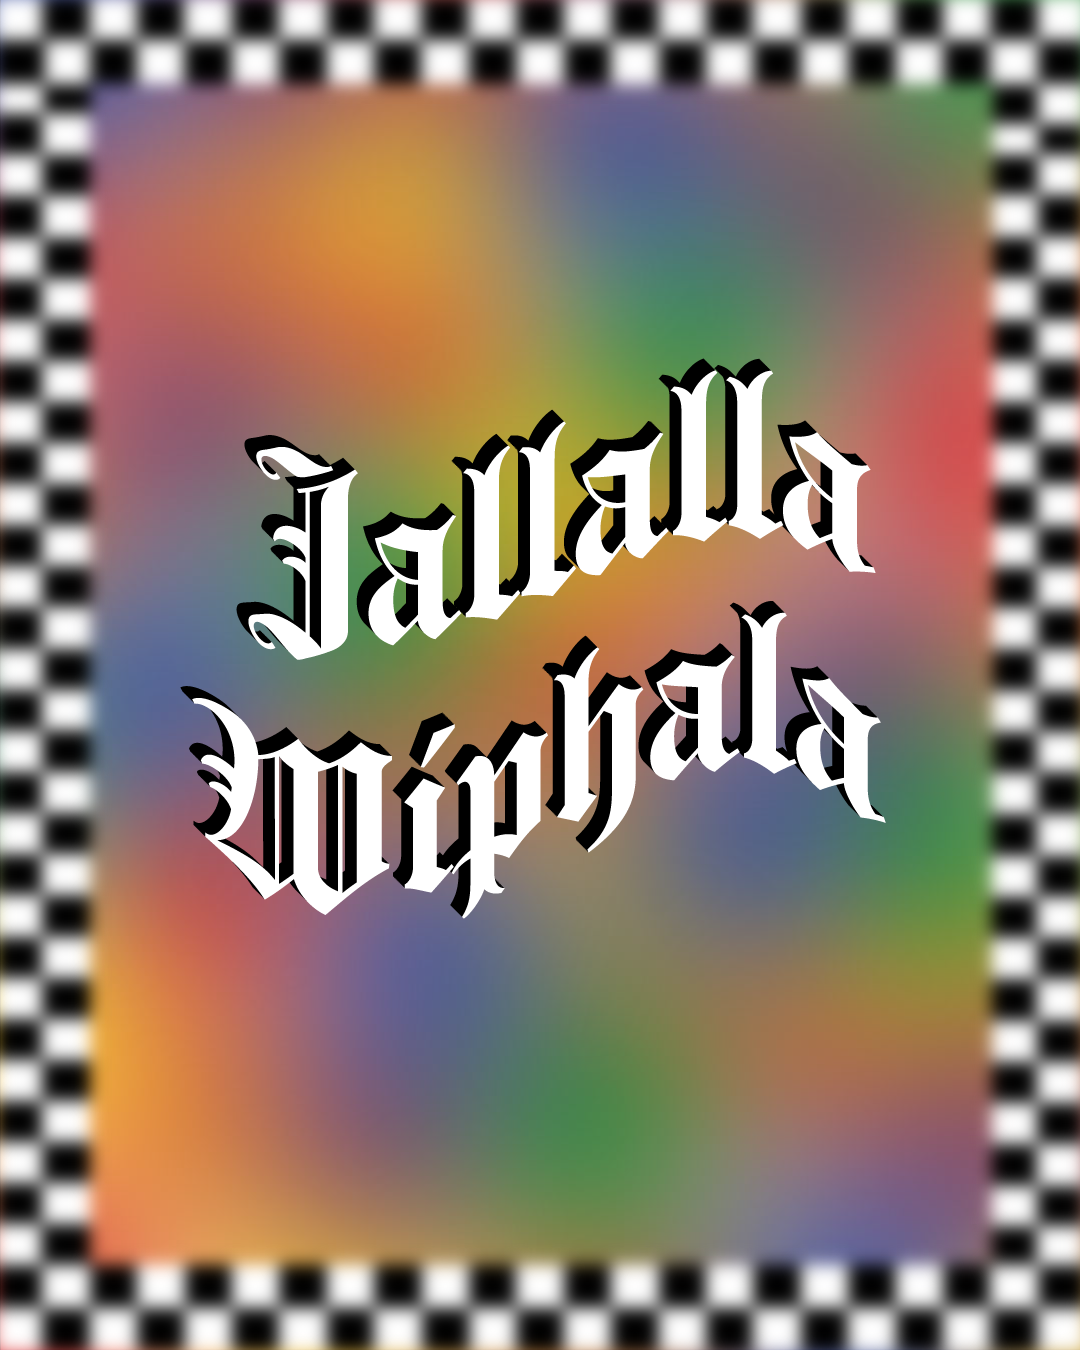 jallalla-wiphala.png